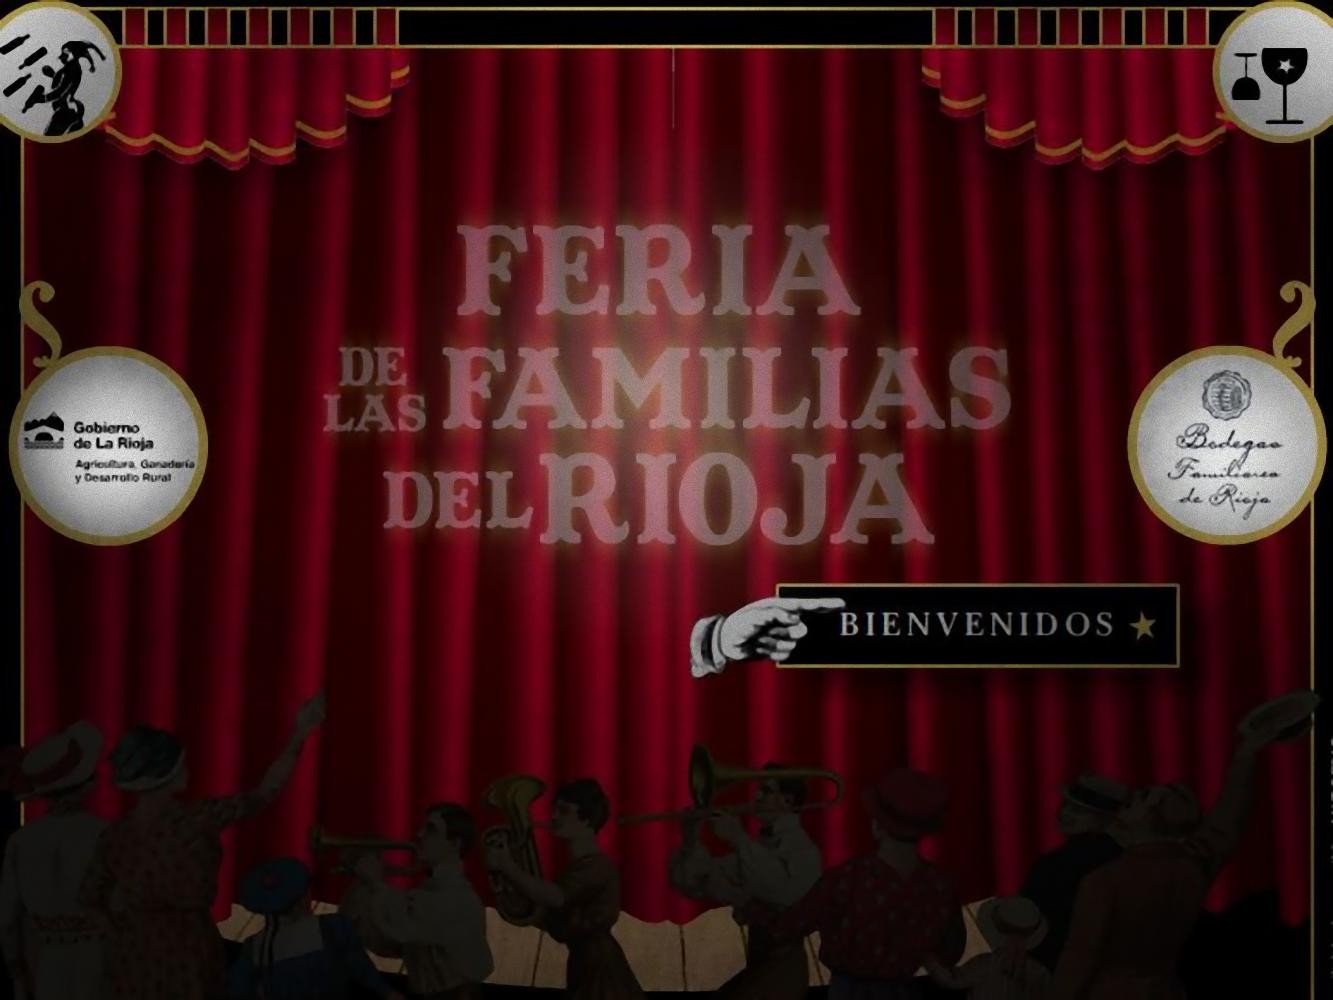 I Feria de las Familias del Rioja